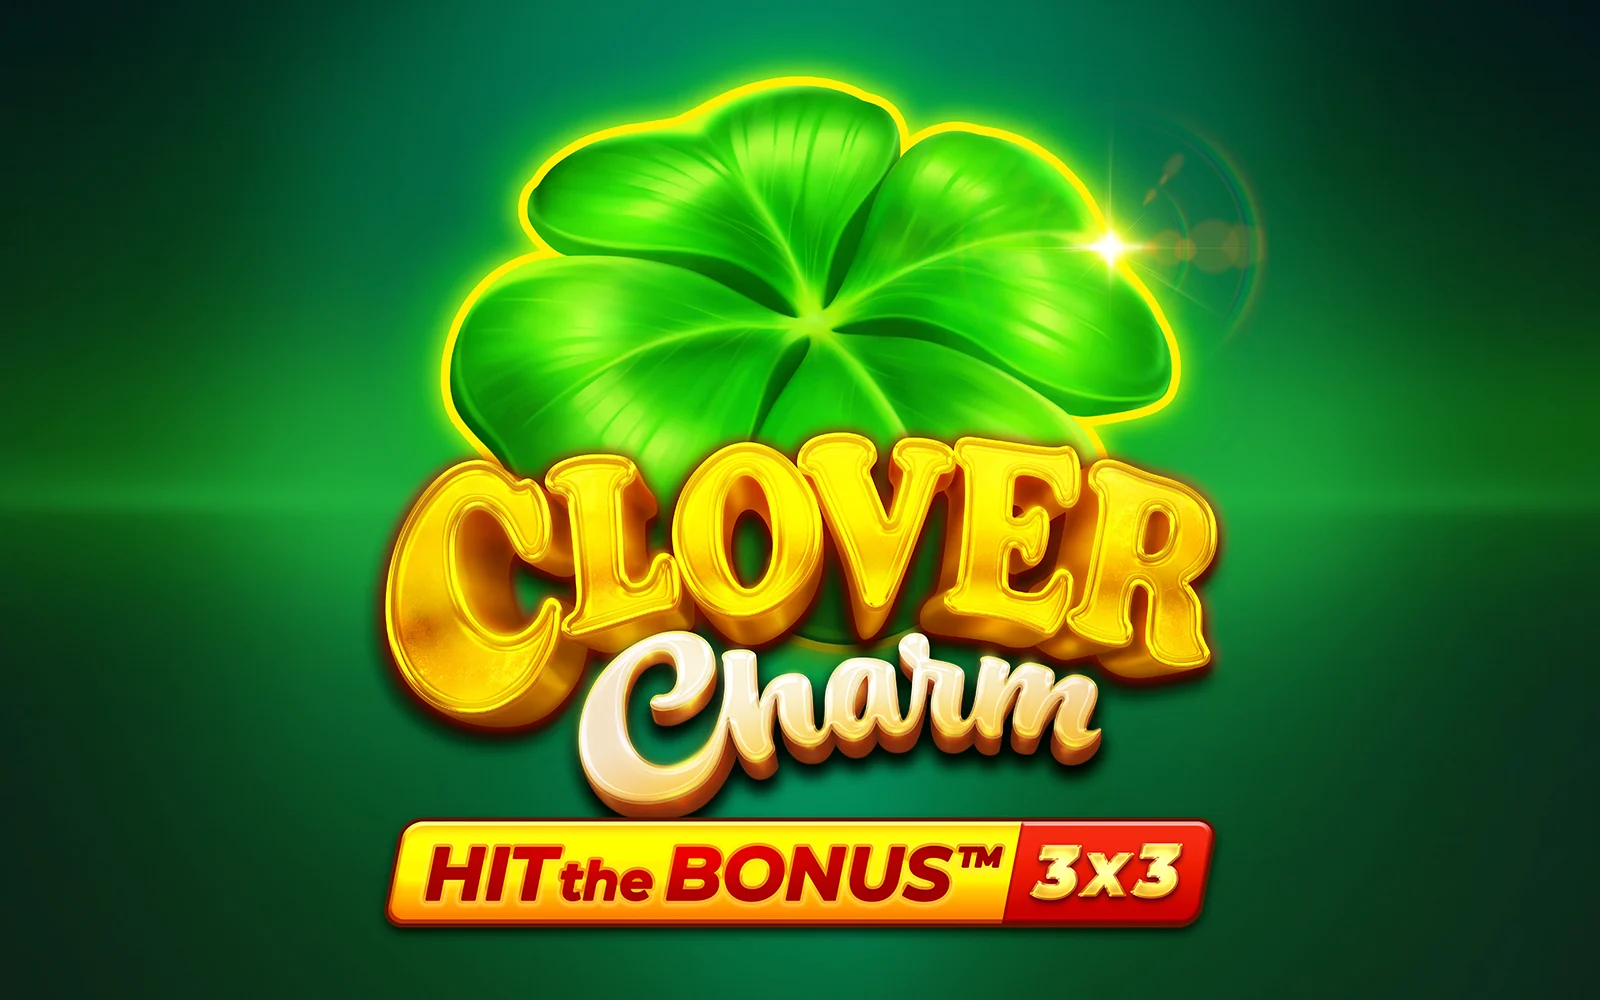 Gioca a Clover Charm: Hit the Bonus ™ sul casino online Starcasino.be